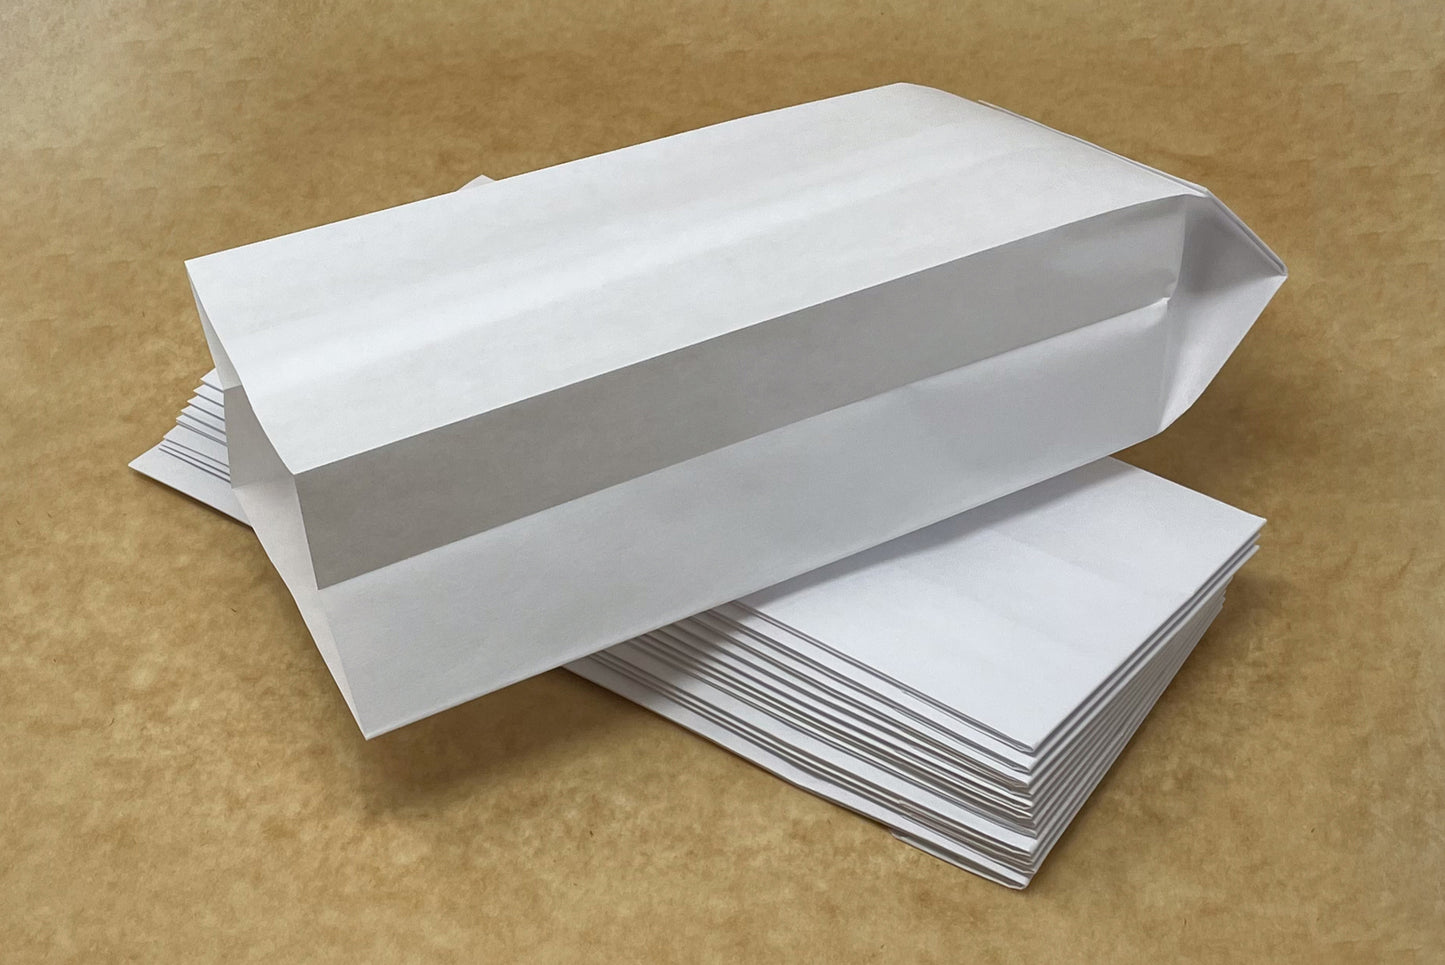 Kraft Paper PE Bag | 260 x 100 x 65mm | Heat-Sealable